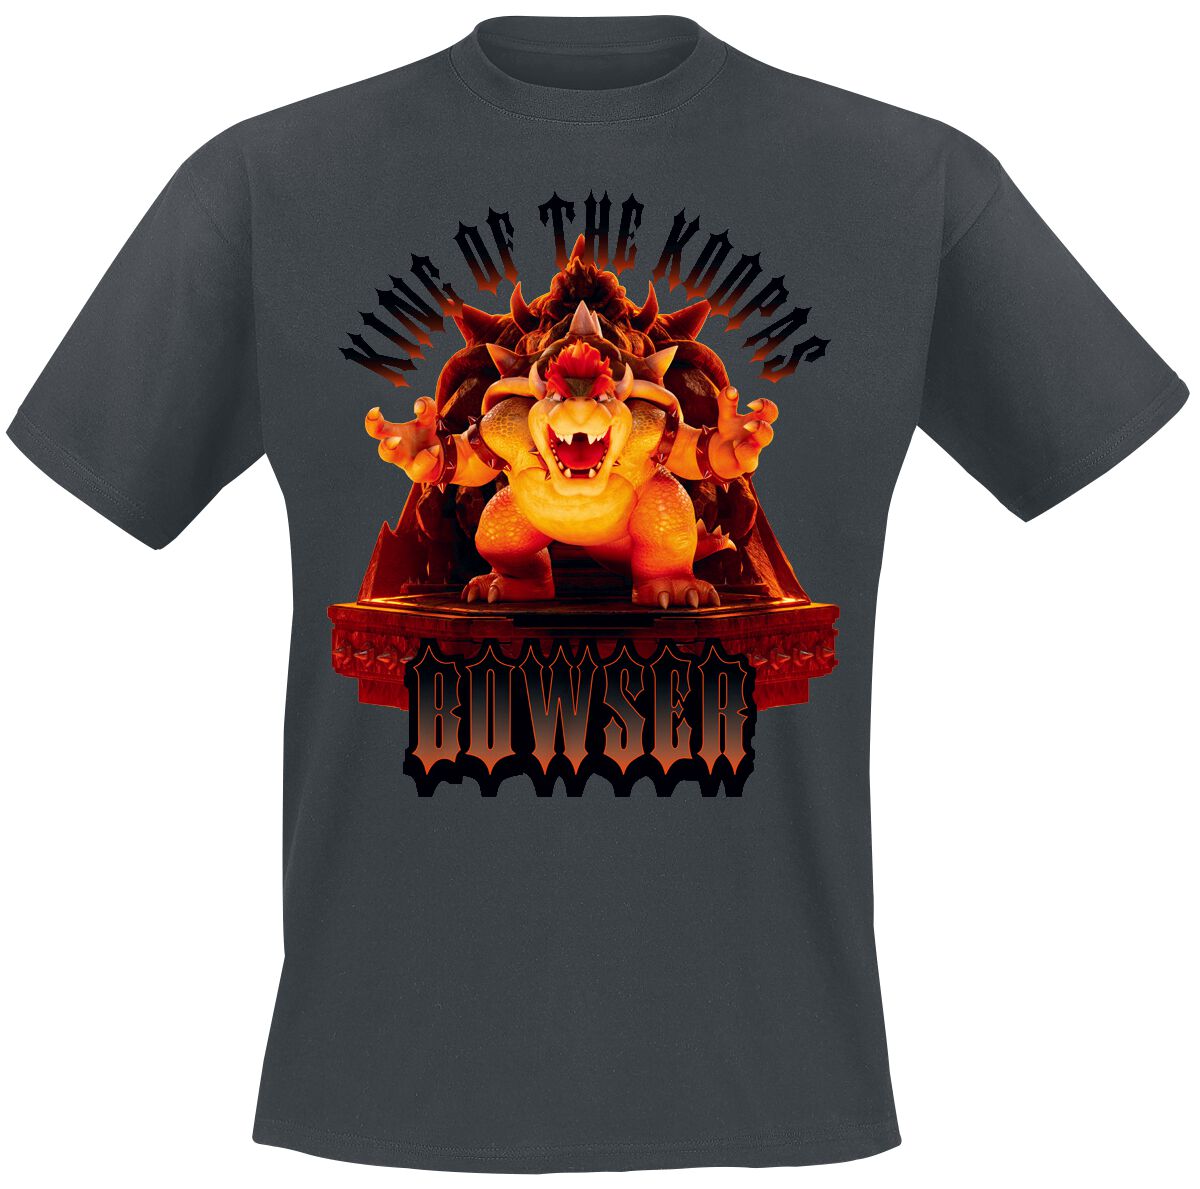 Super Mario - Gaming T-Shirt - Bowser - King Of The Koopas - M bis XL - für Männer - Größe L - grau